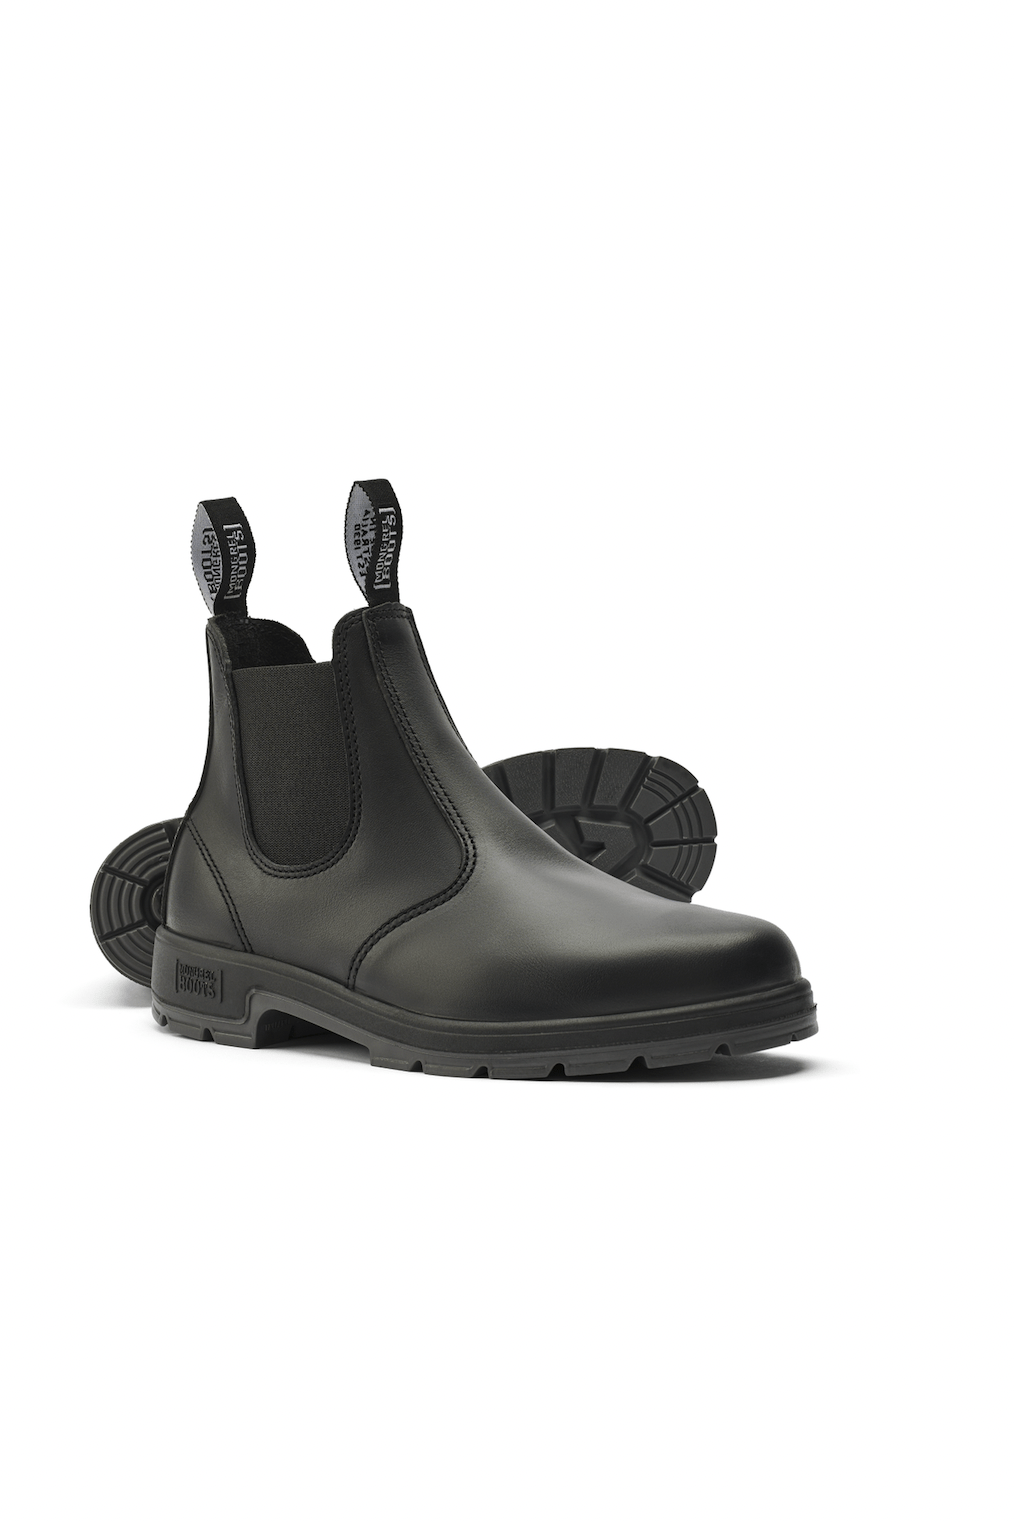 Mongrel K9 Non Safety Work Boot - Black - BIG Boots UK